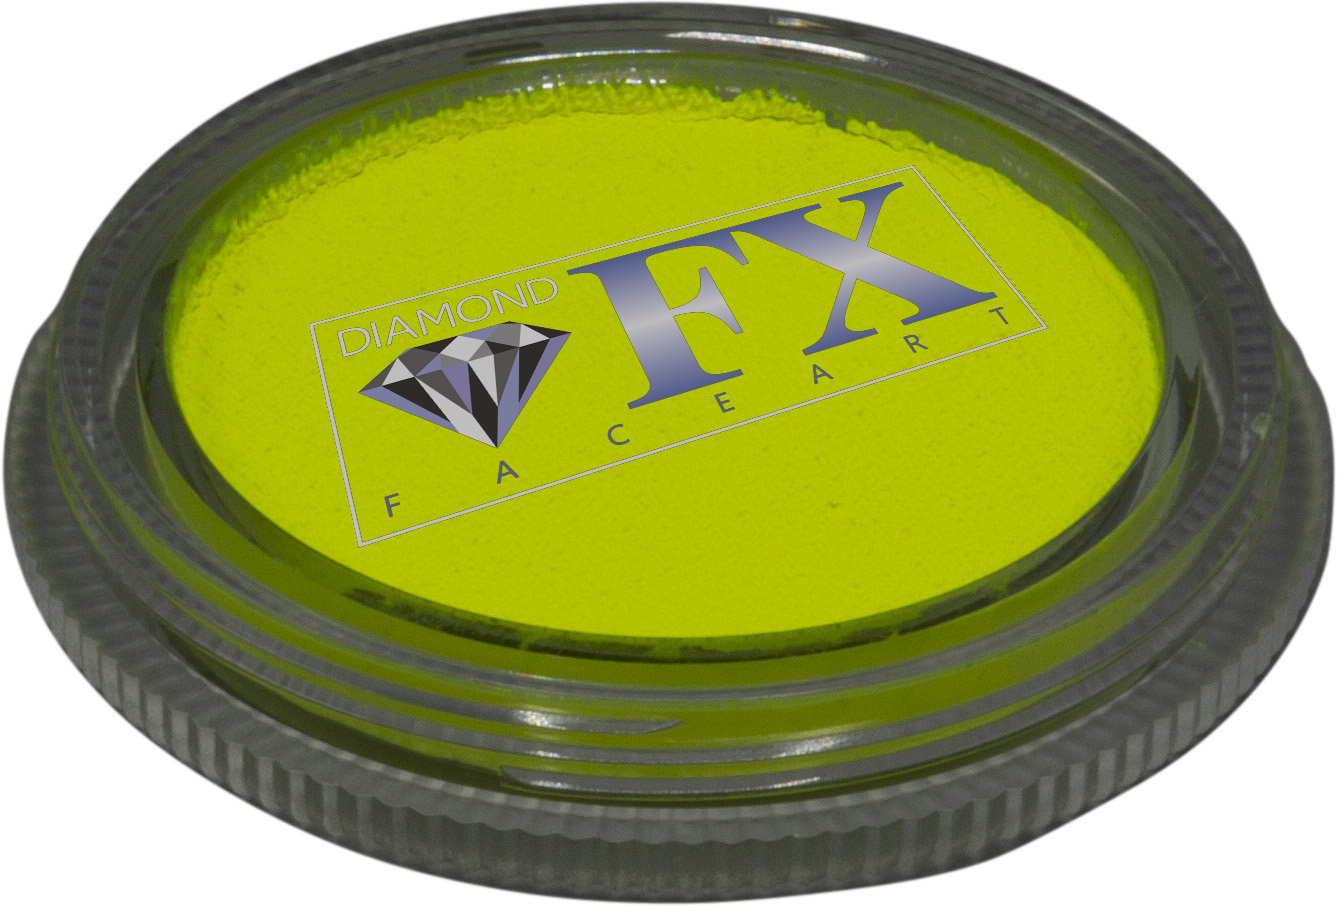 Diamond FX Yellow Neon 30g - Small Image